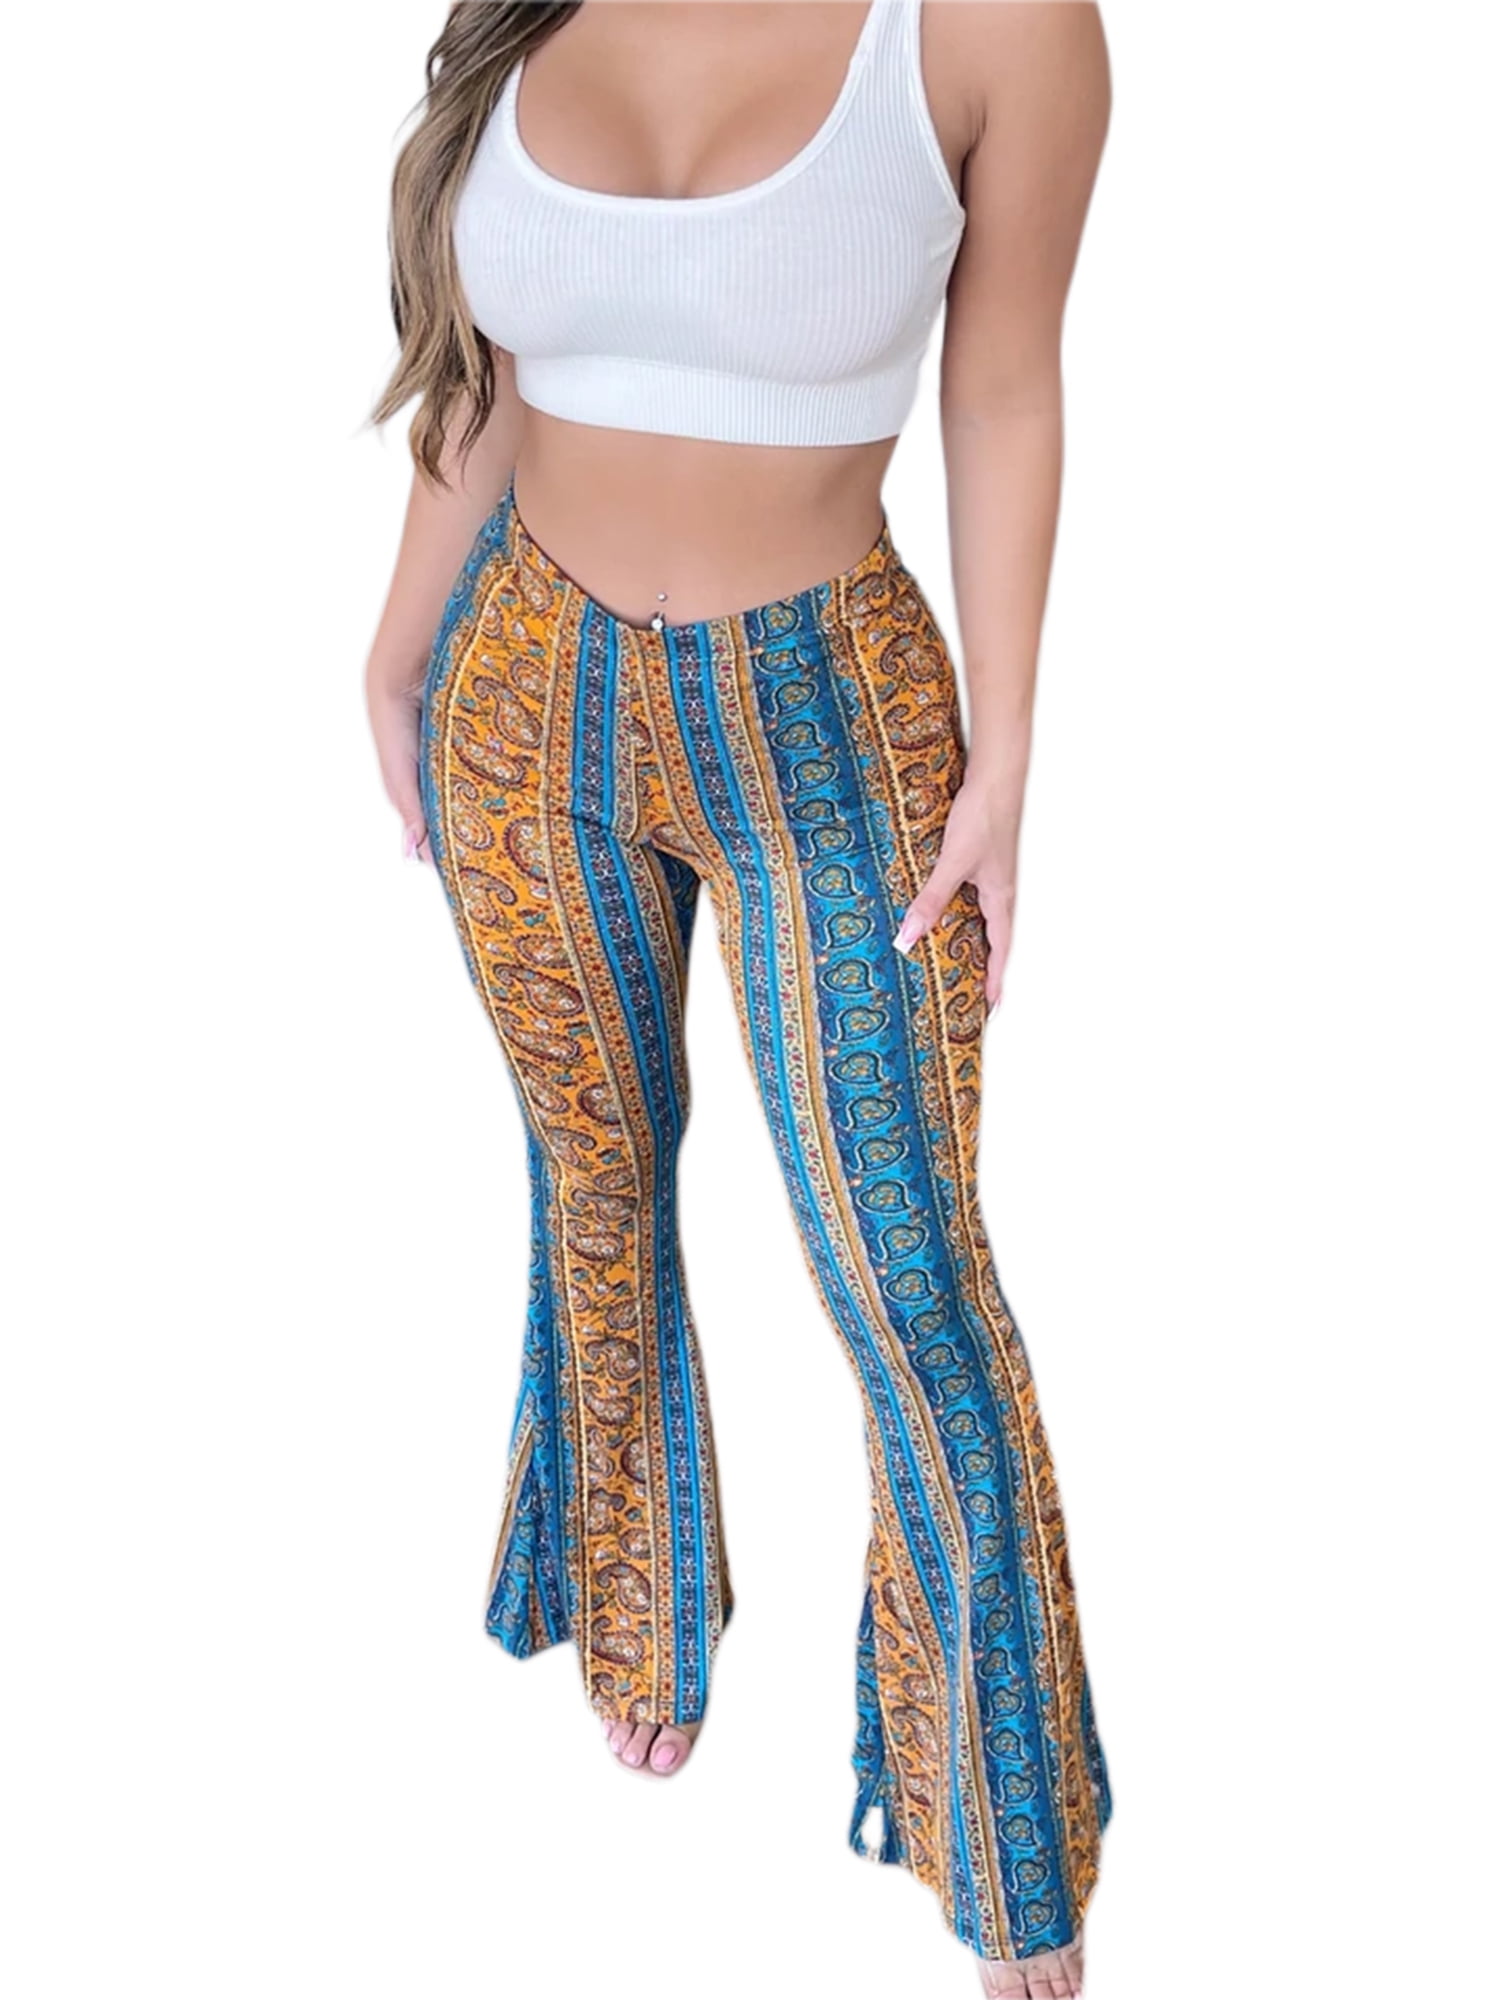 SWIRL Women Boho Pants Hippie Pants Yoga Pants – Lizzie Lahaina Couture  Swimwear Made In Maui